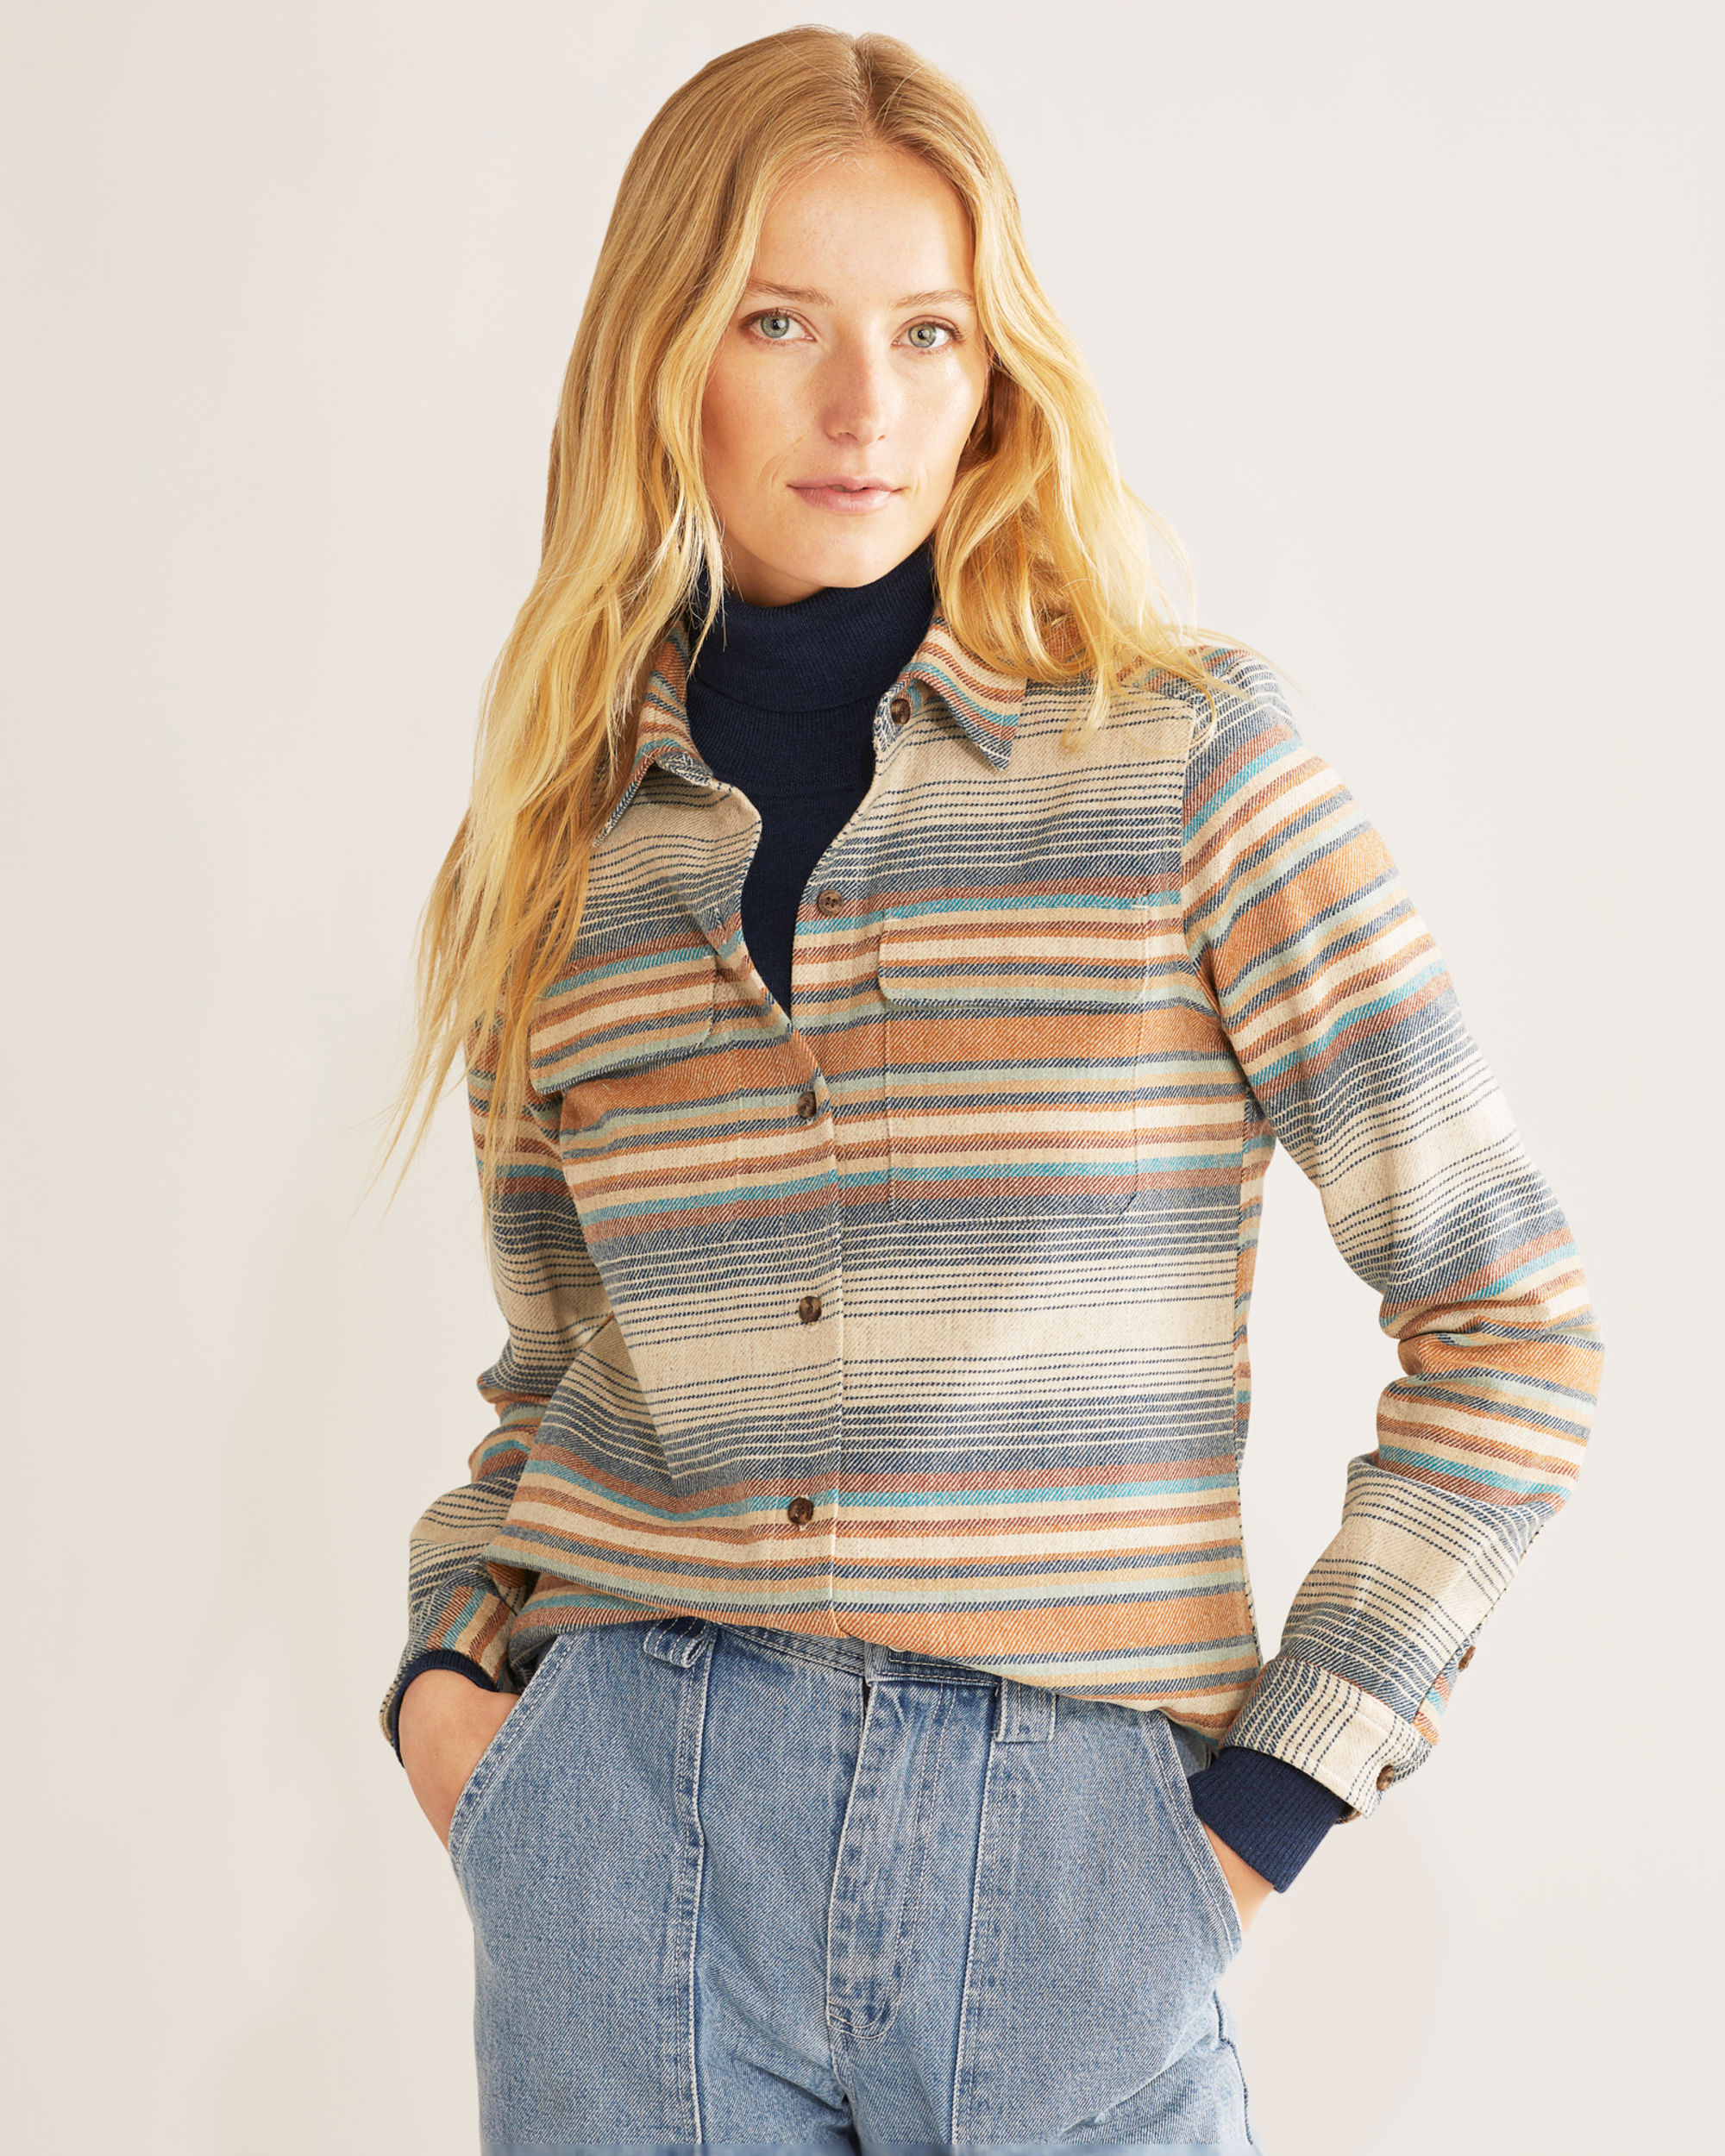 Look Stylish in the Women's Striped Board Shirt | Pendleton